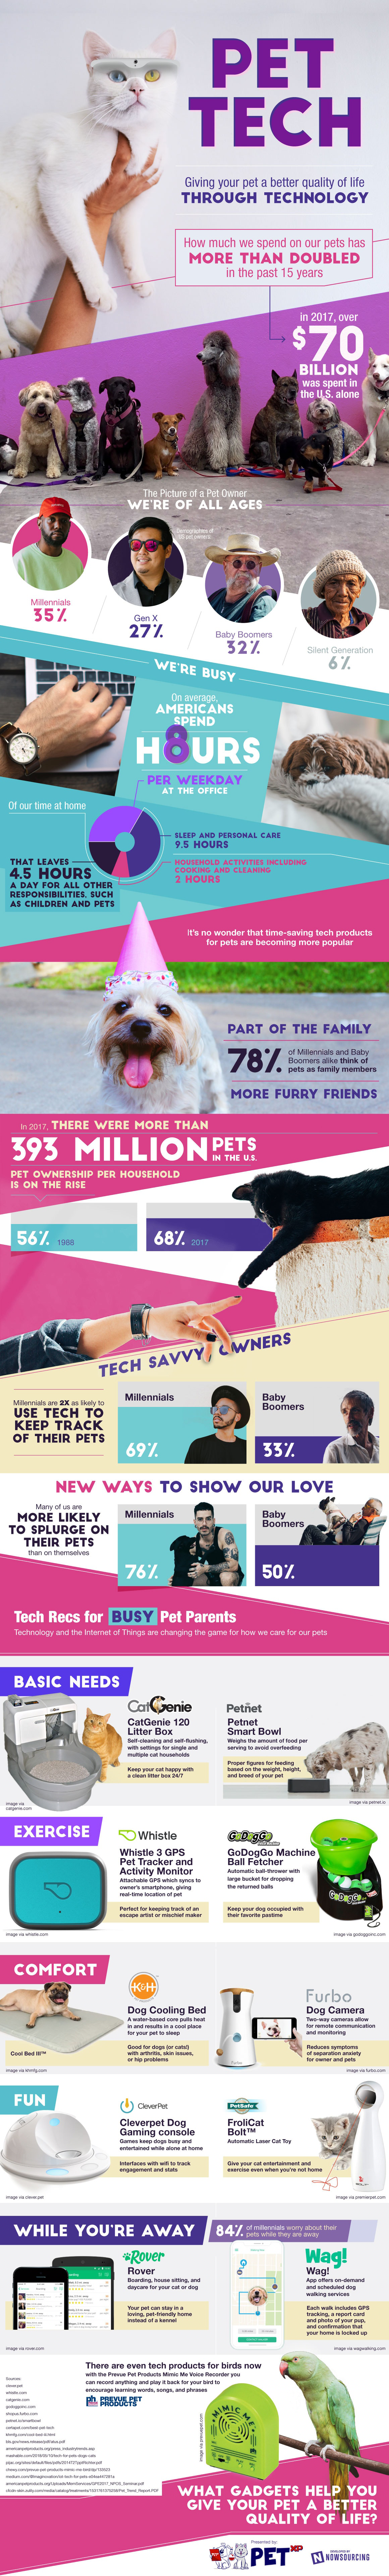 Pet Tech on Spots.com